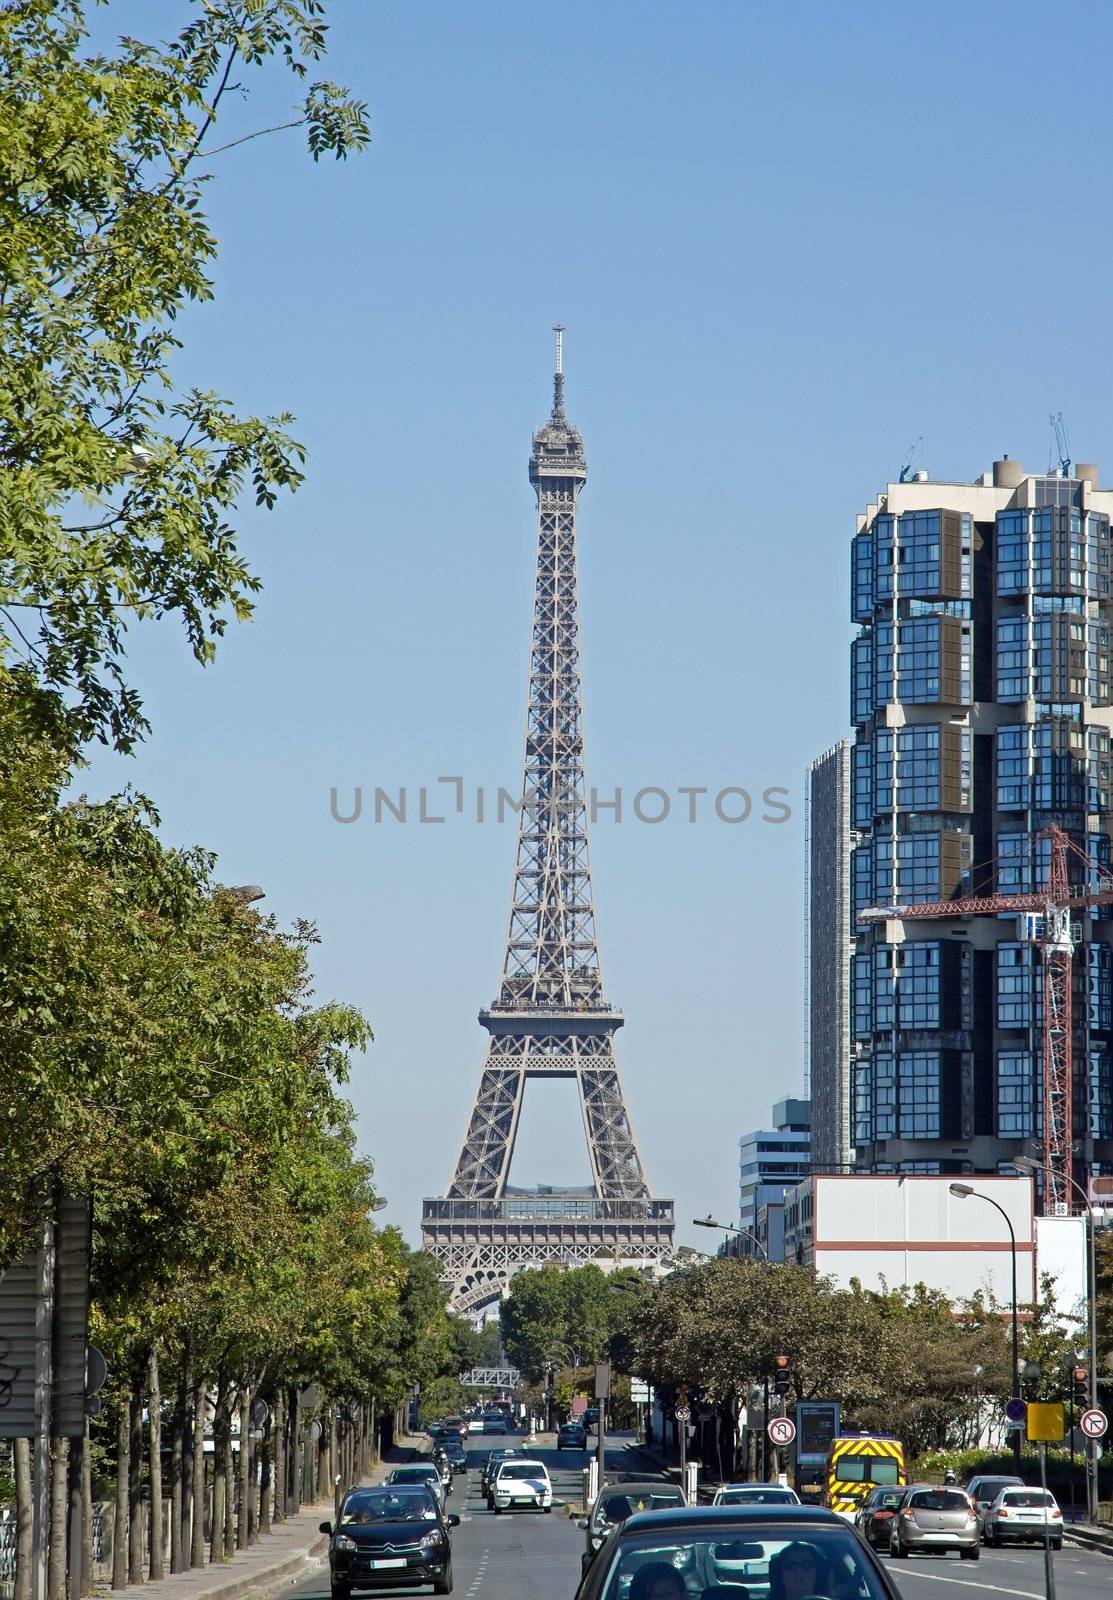 Parisian boulevard, the Eiffel Tower in target (Paris France) by neko92vl